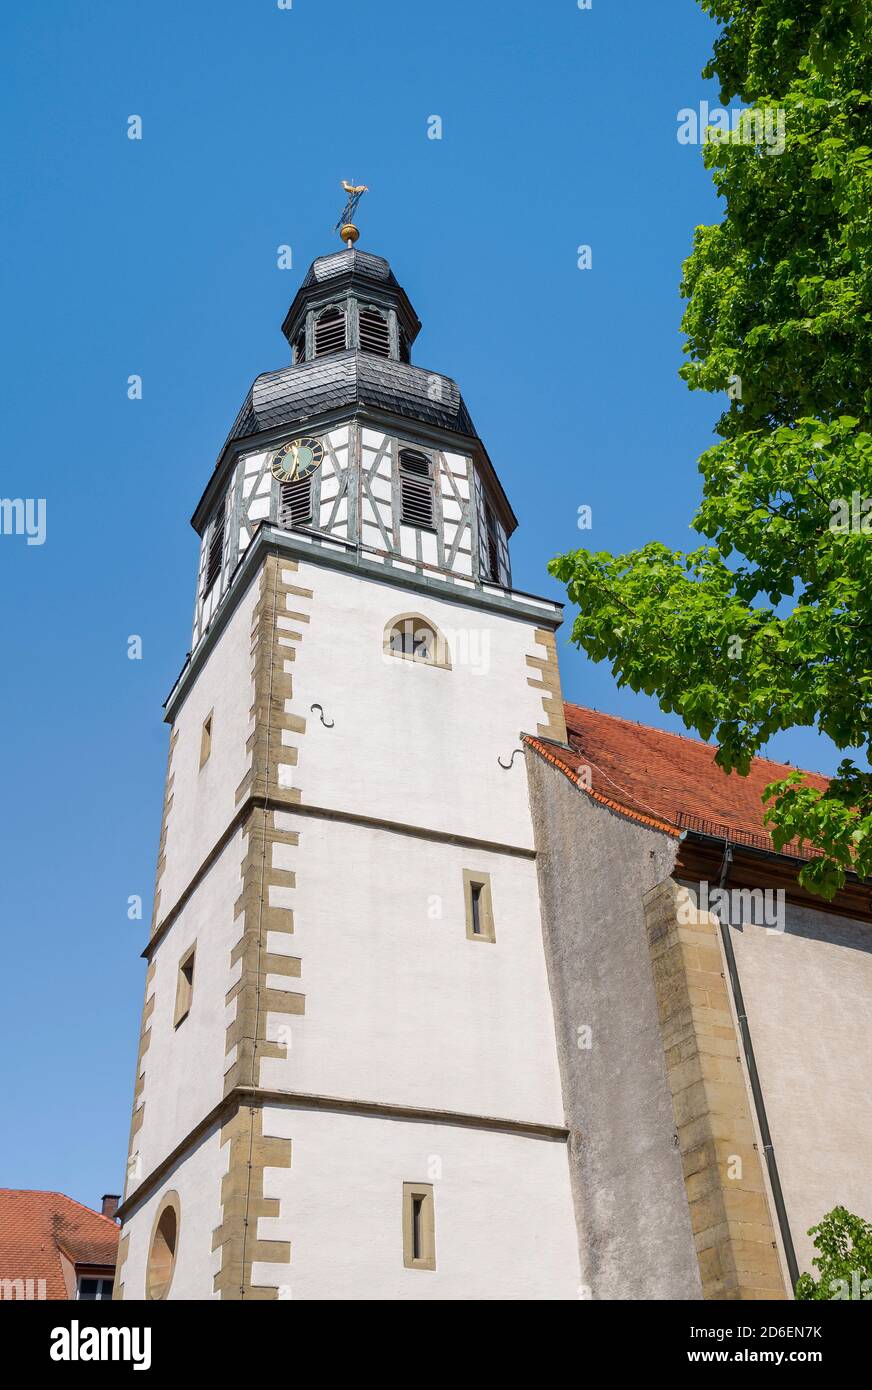 Germany, Baden-Wuerttemberg, Kraichtal-Gochsheim, St. Martinskirche, St. Martin Church, steeple with half-timbered tower and slate onion dome Stock Photo